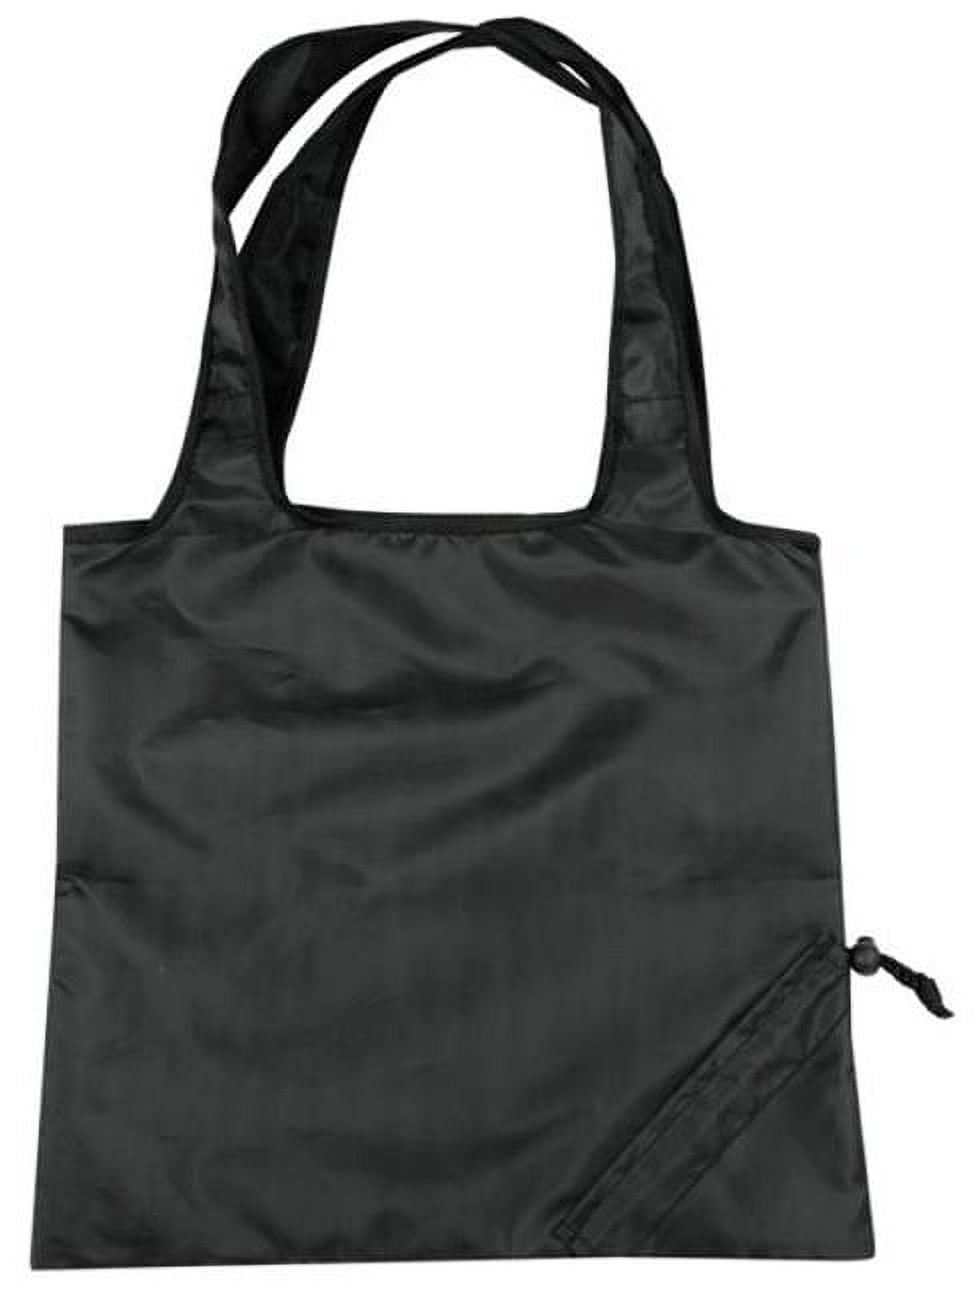 DDI 1923782 Foldable Tote Bag [Black] Case of 72 - Walmart.com